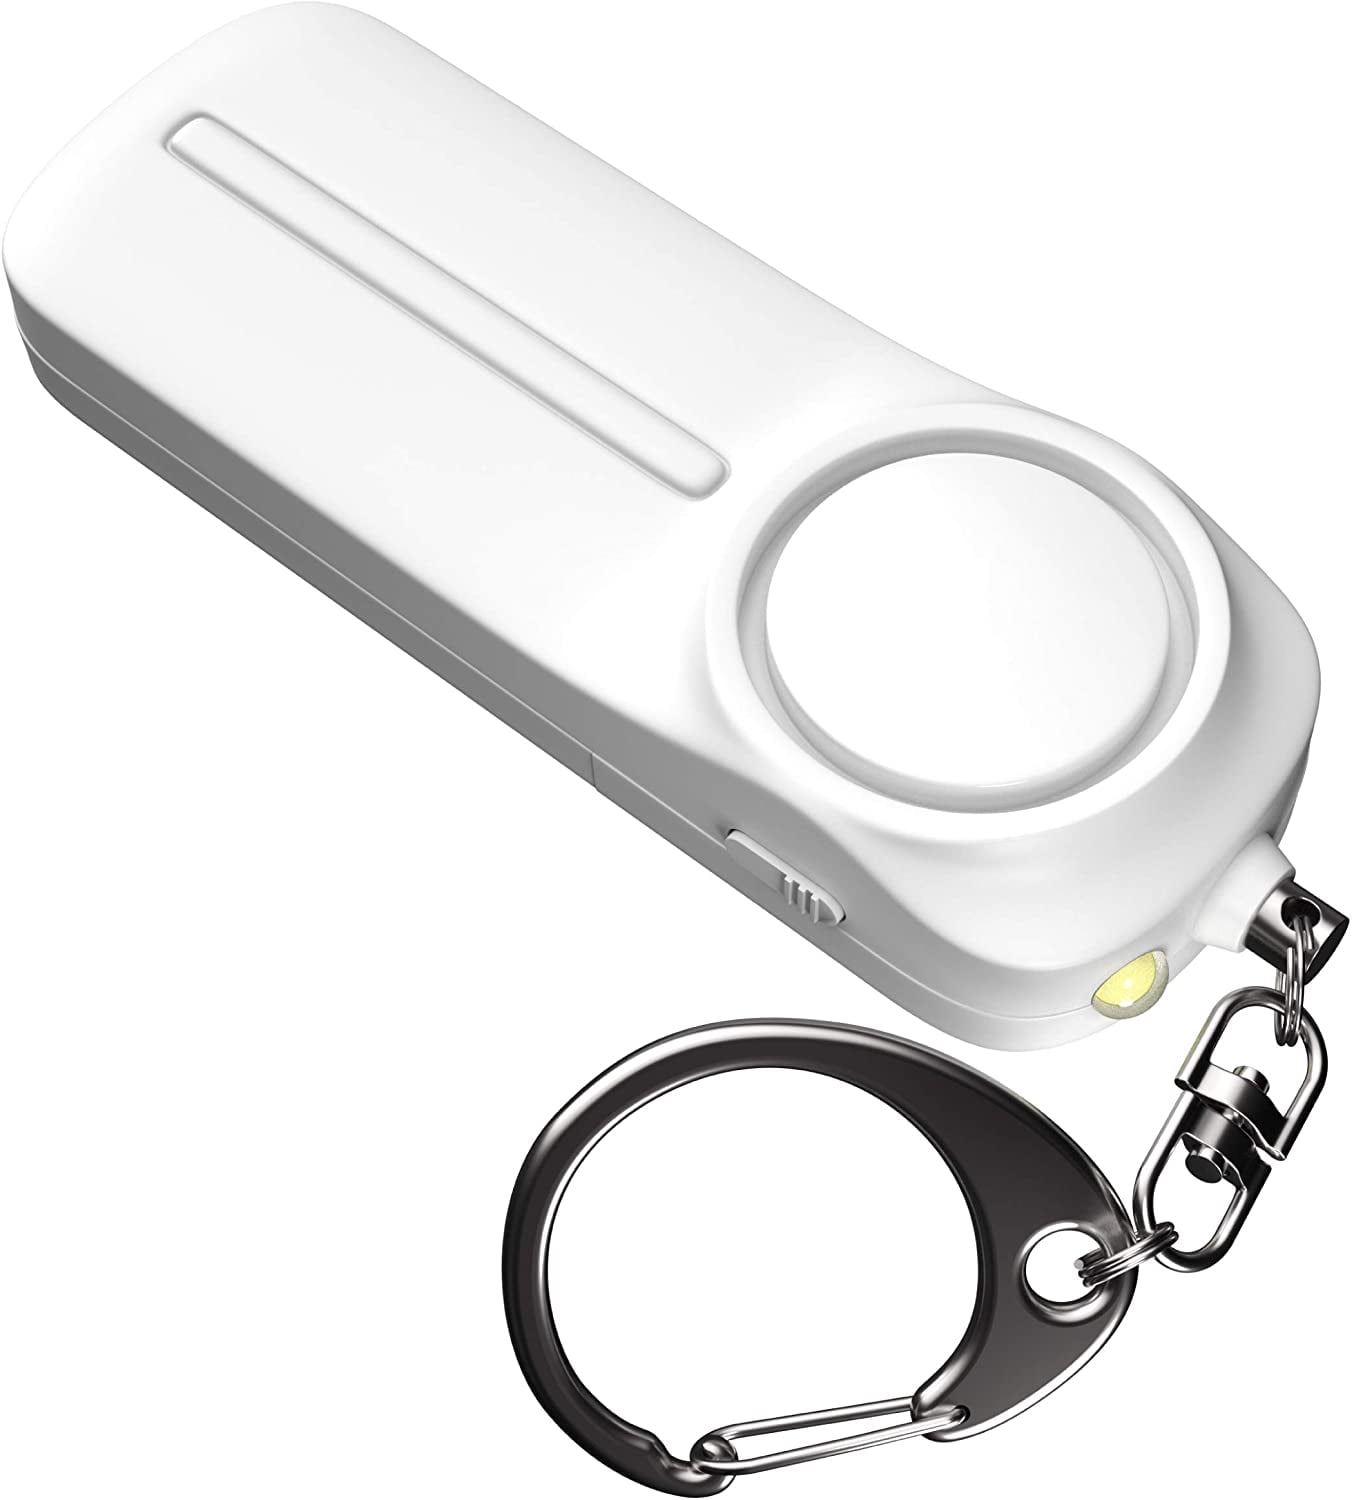 Emergency Personal Alarm Keychain 130dB Sound Safe Self-Defense LED Light Siren 